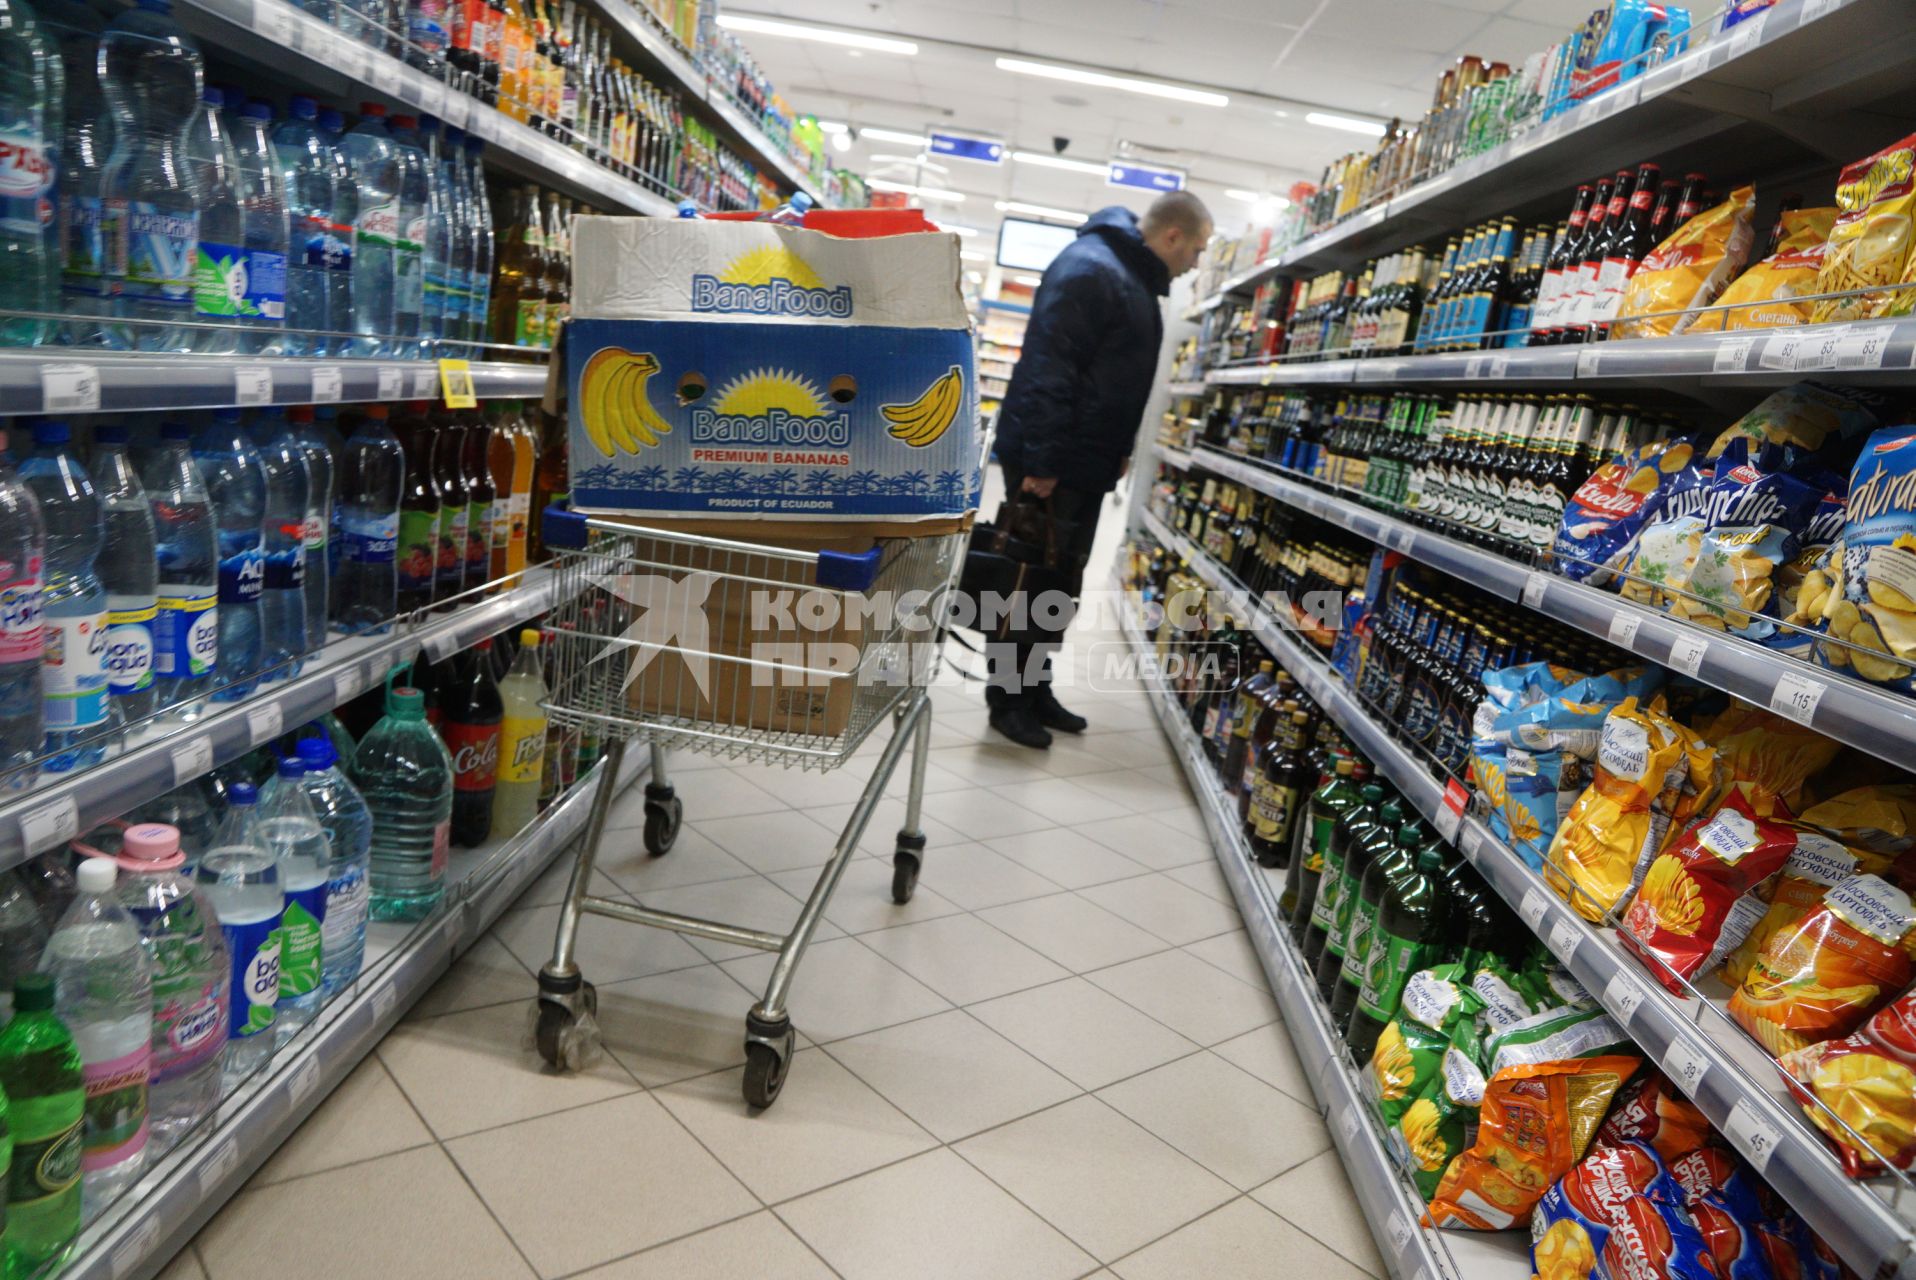 Екатеринбург. Мужчина у полок с пивом в супермаркете `Перекресток`.